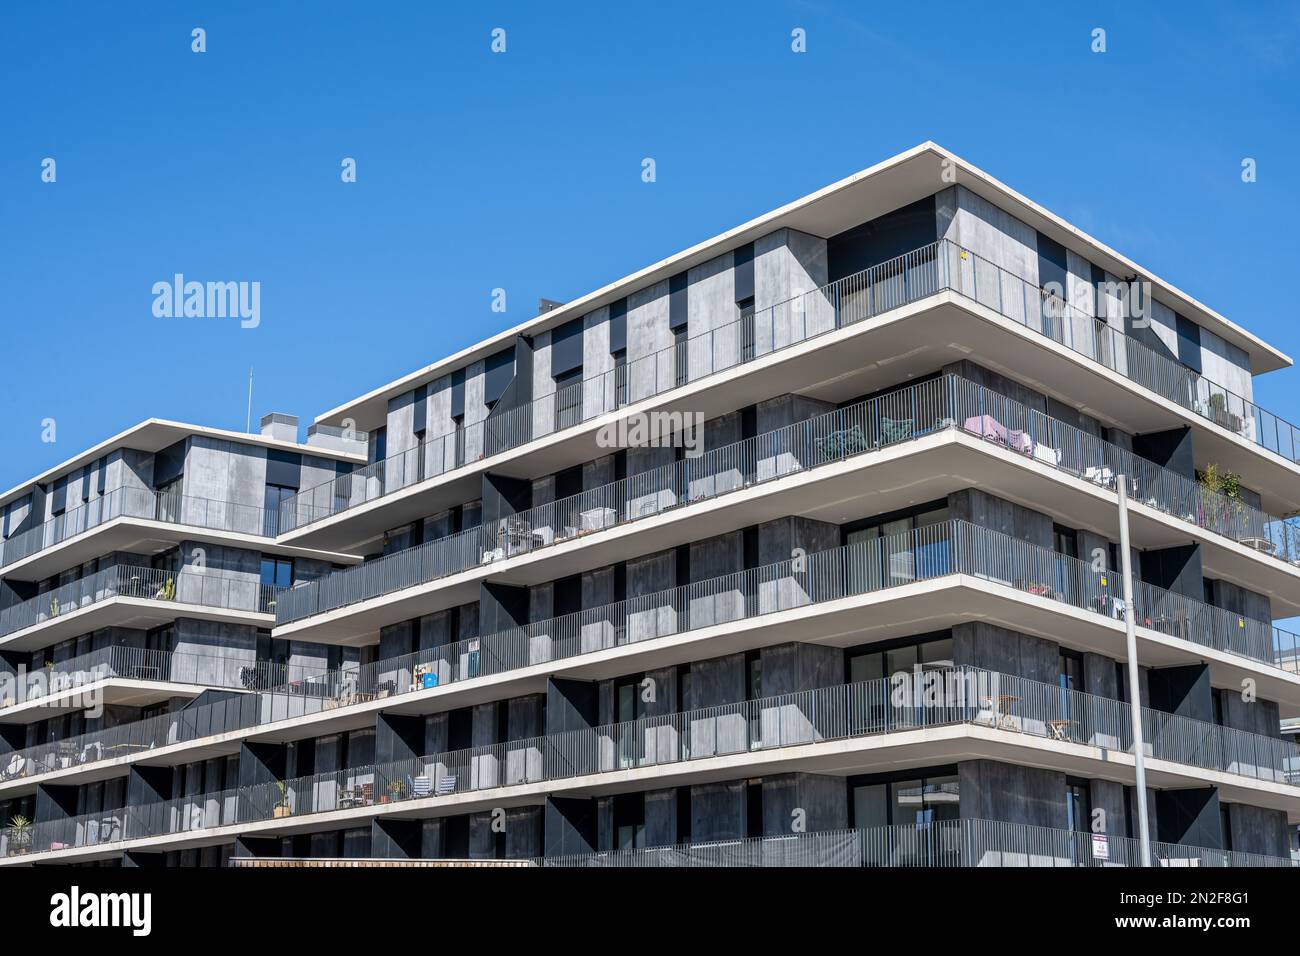 Modern gray apartment buildings seen in Barcelona, Spain Stock Photo